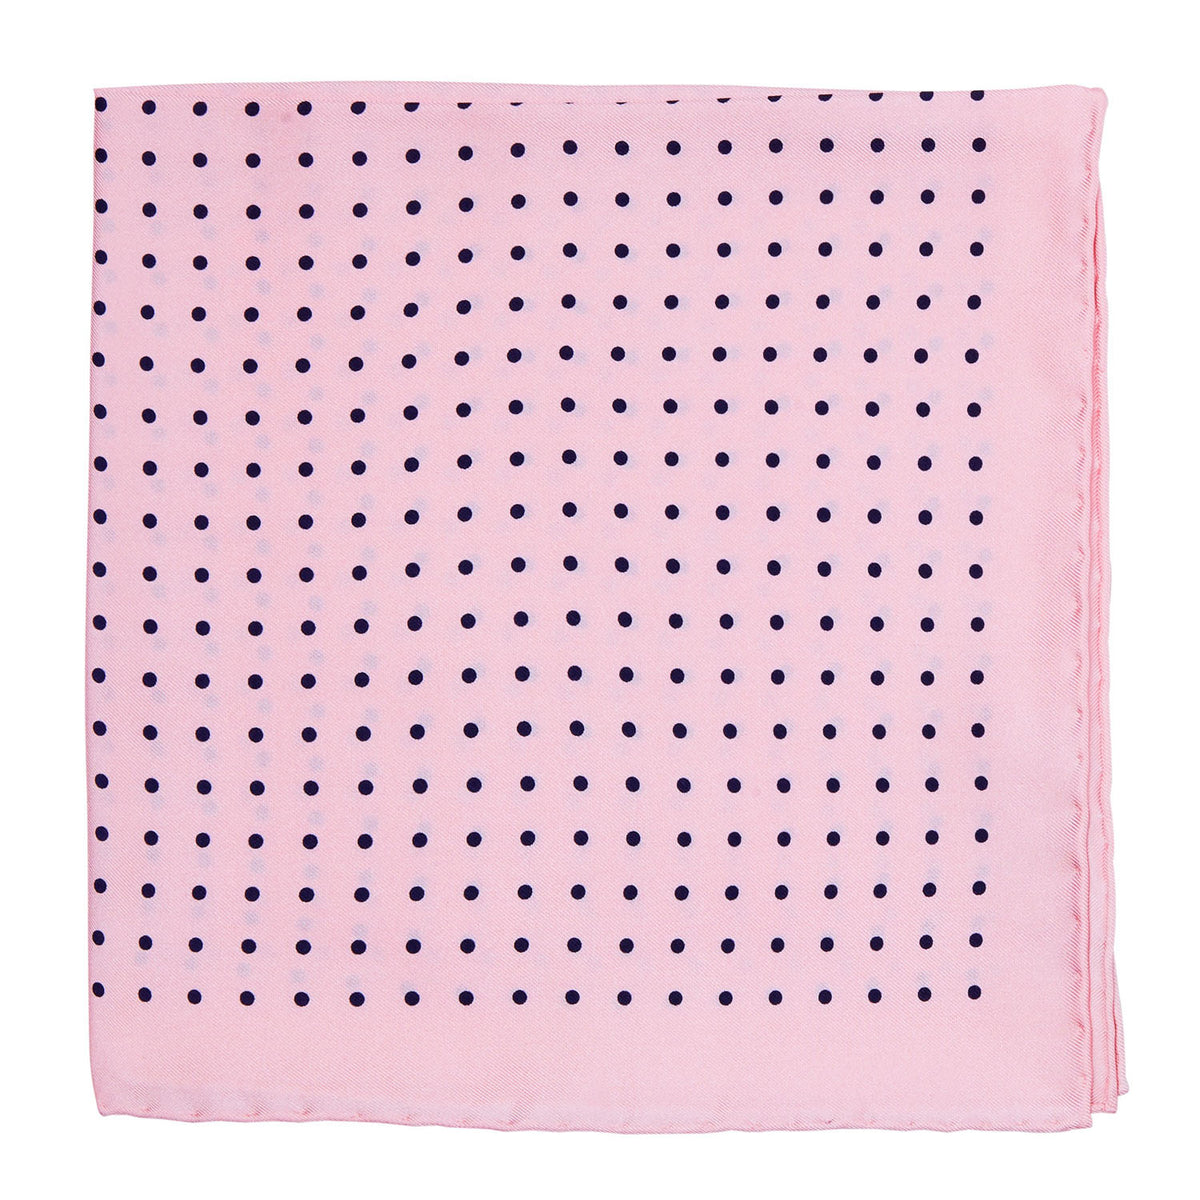 Sovereign Grade 100% Silk Pink London Dot Pocket Square